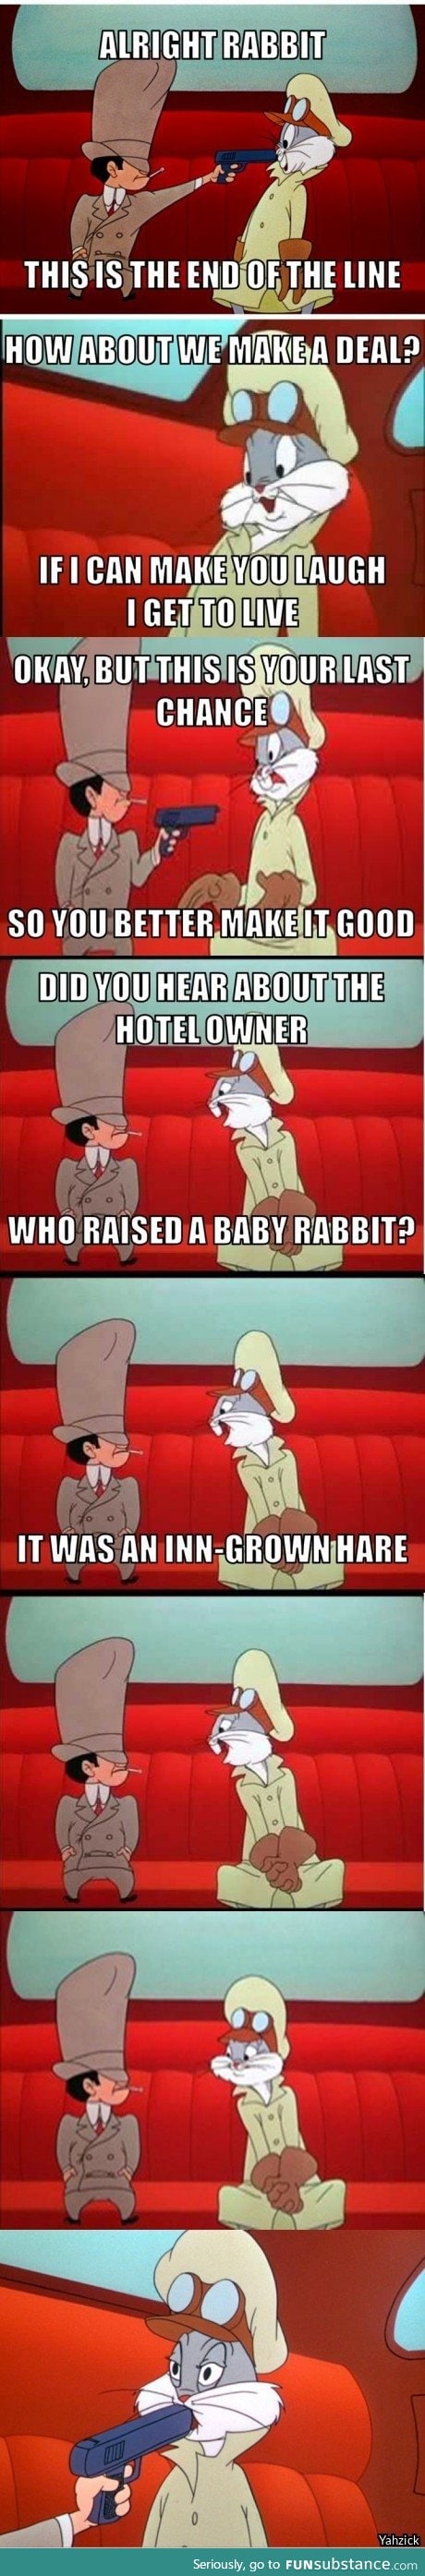 Ooooh that rabbit!